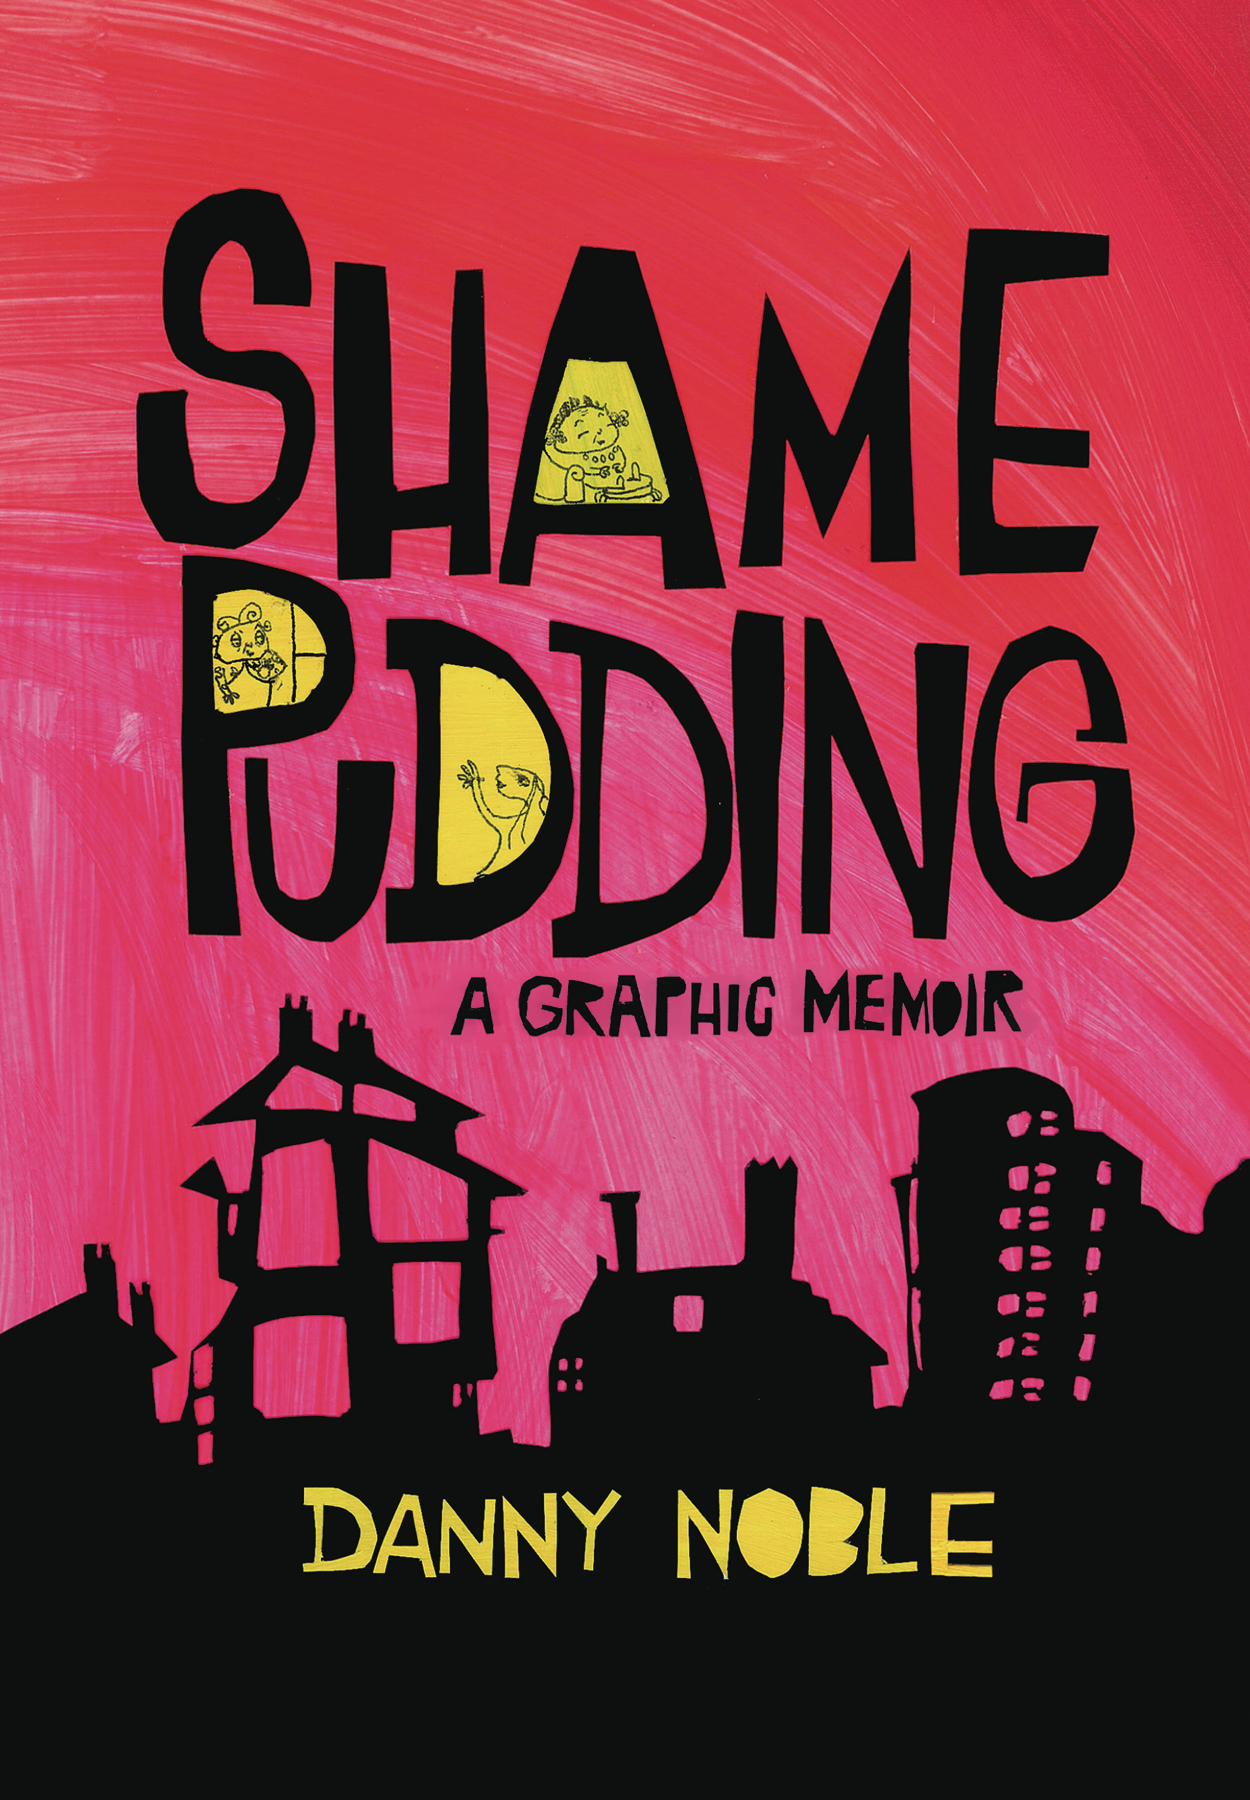 Shame Pudding: A Graphic Memoir